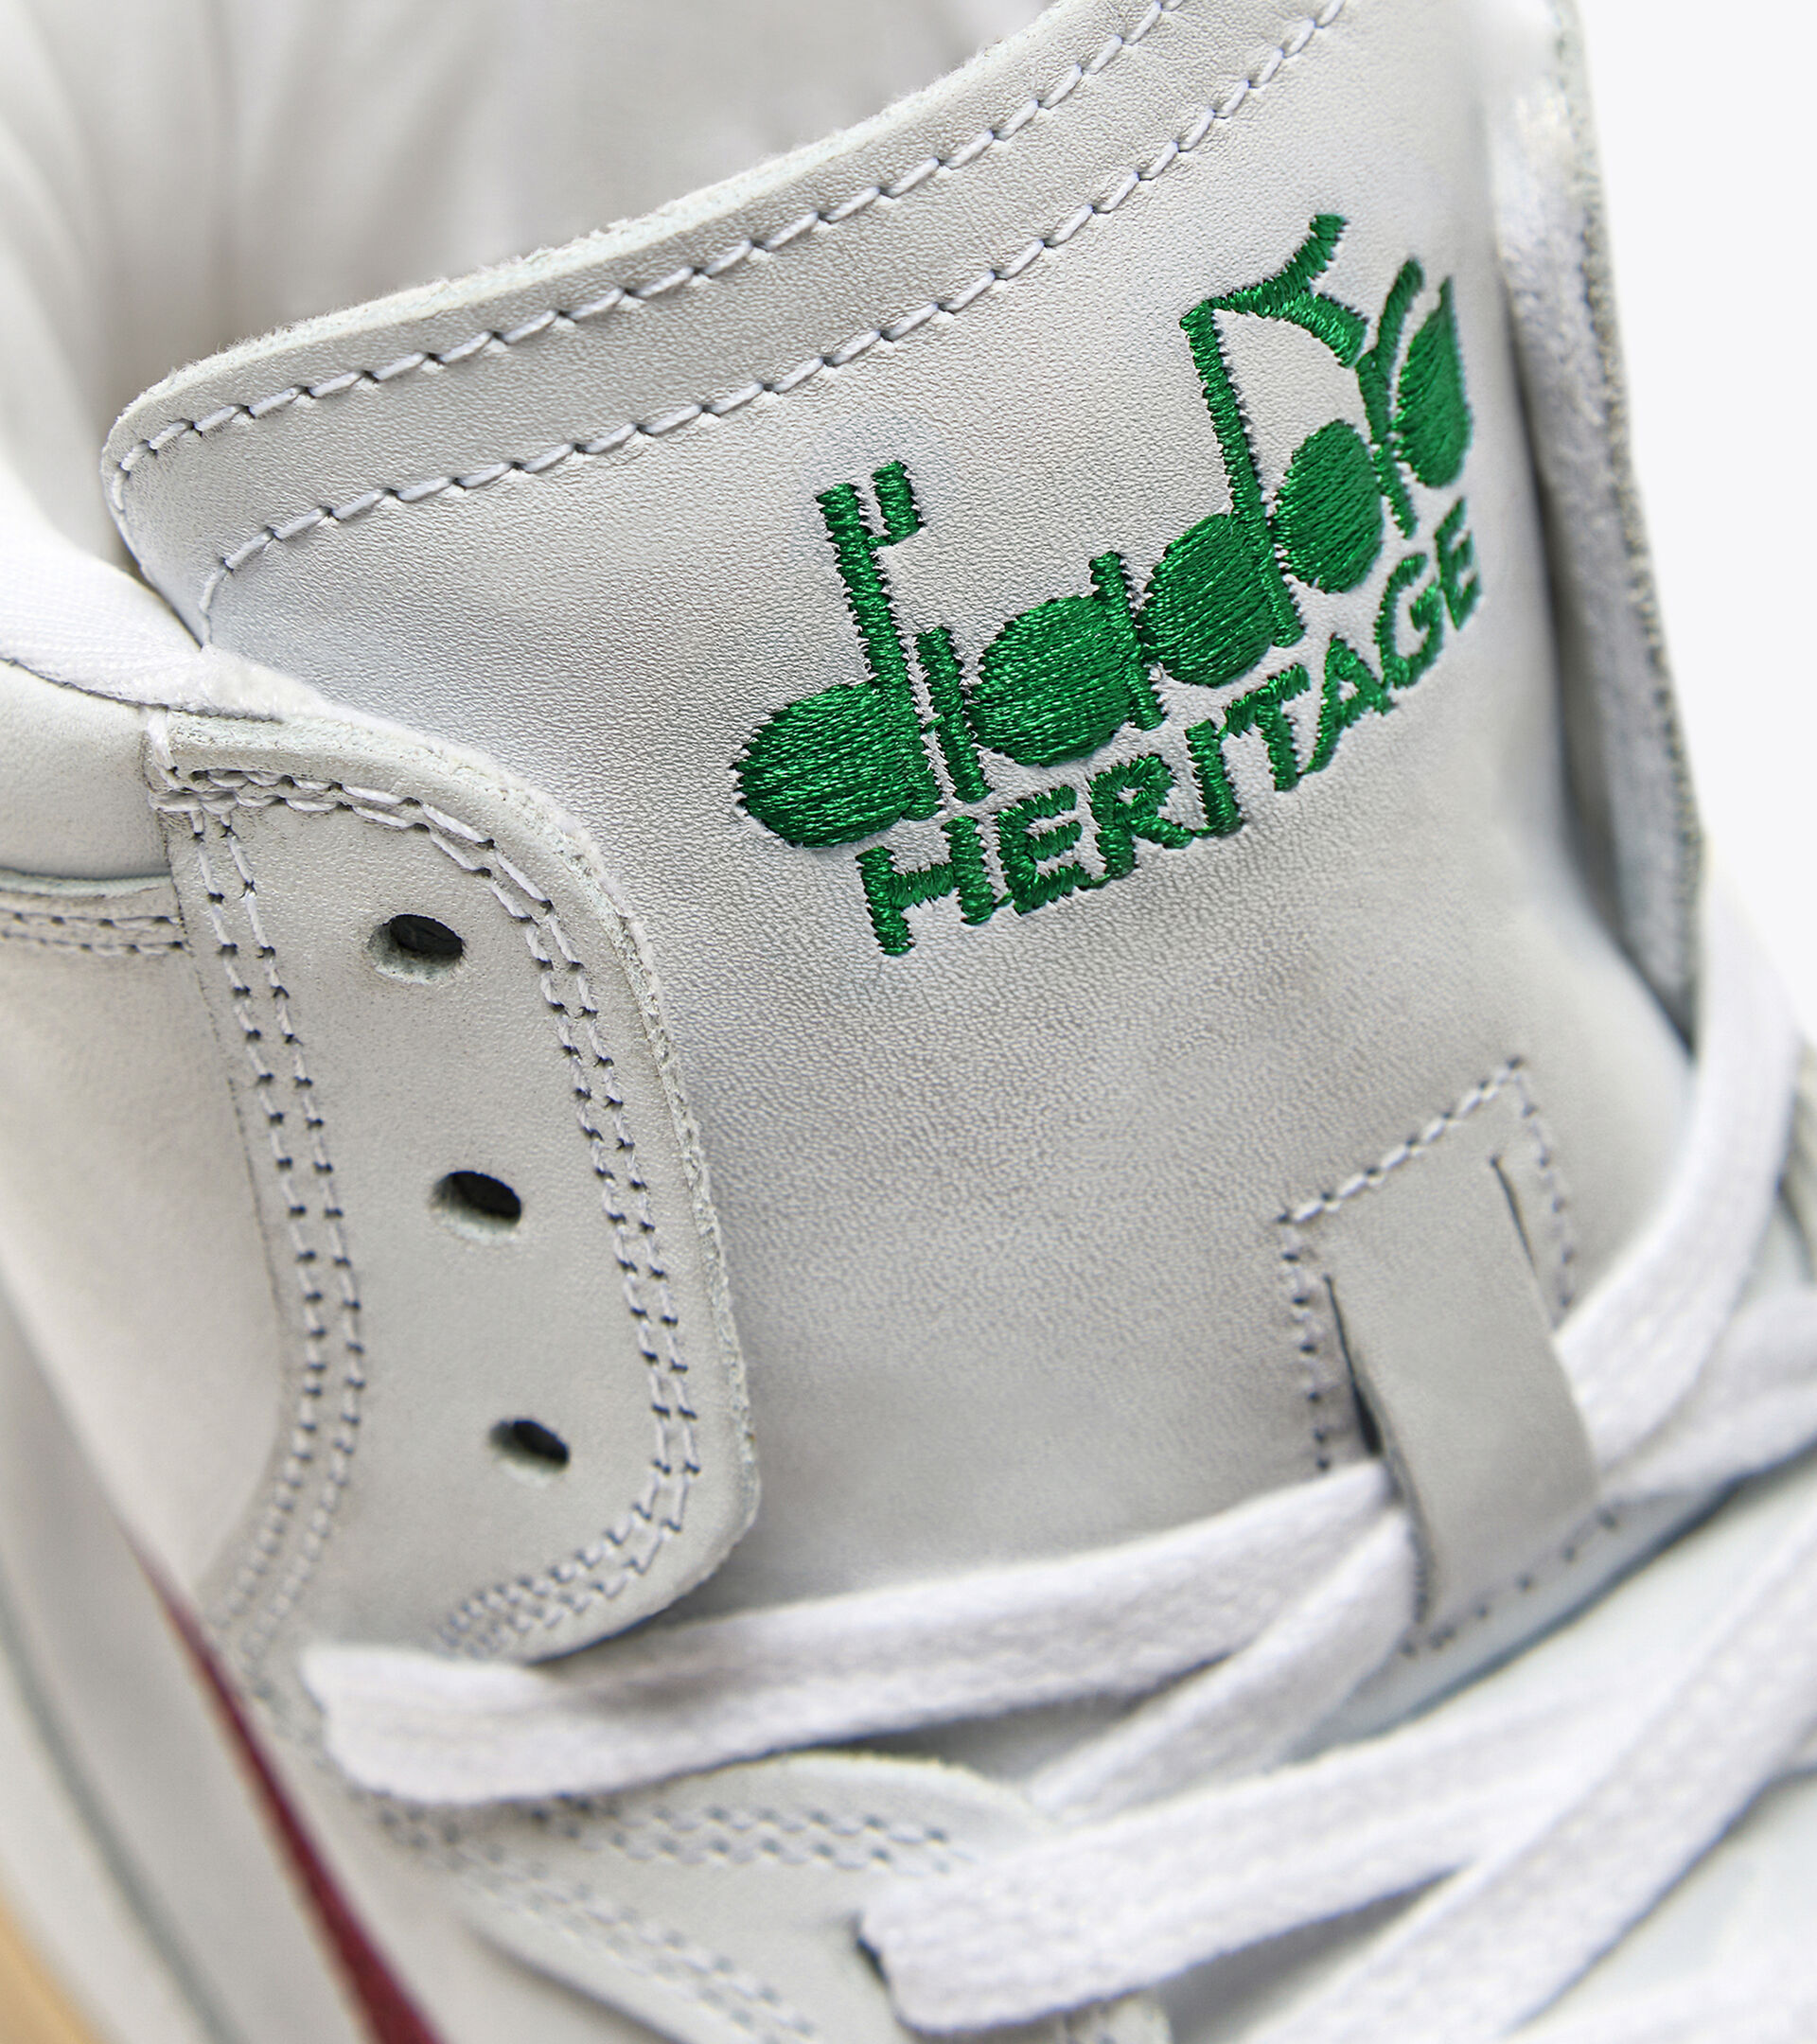 Heritage-Schuh - Unisex MI BASKET USED WHITE/VERDANT GREEN - Diadora